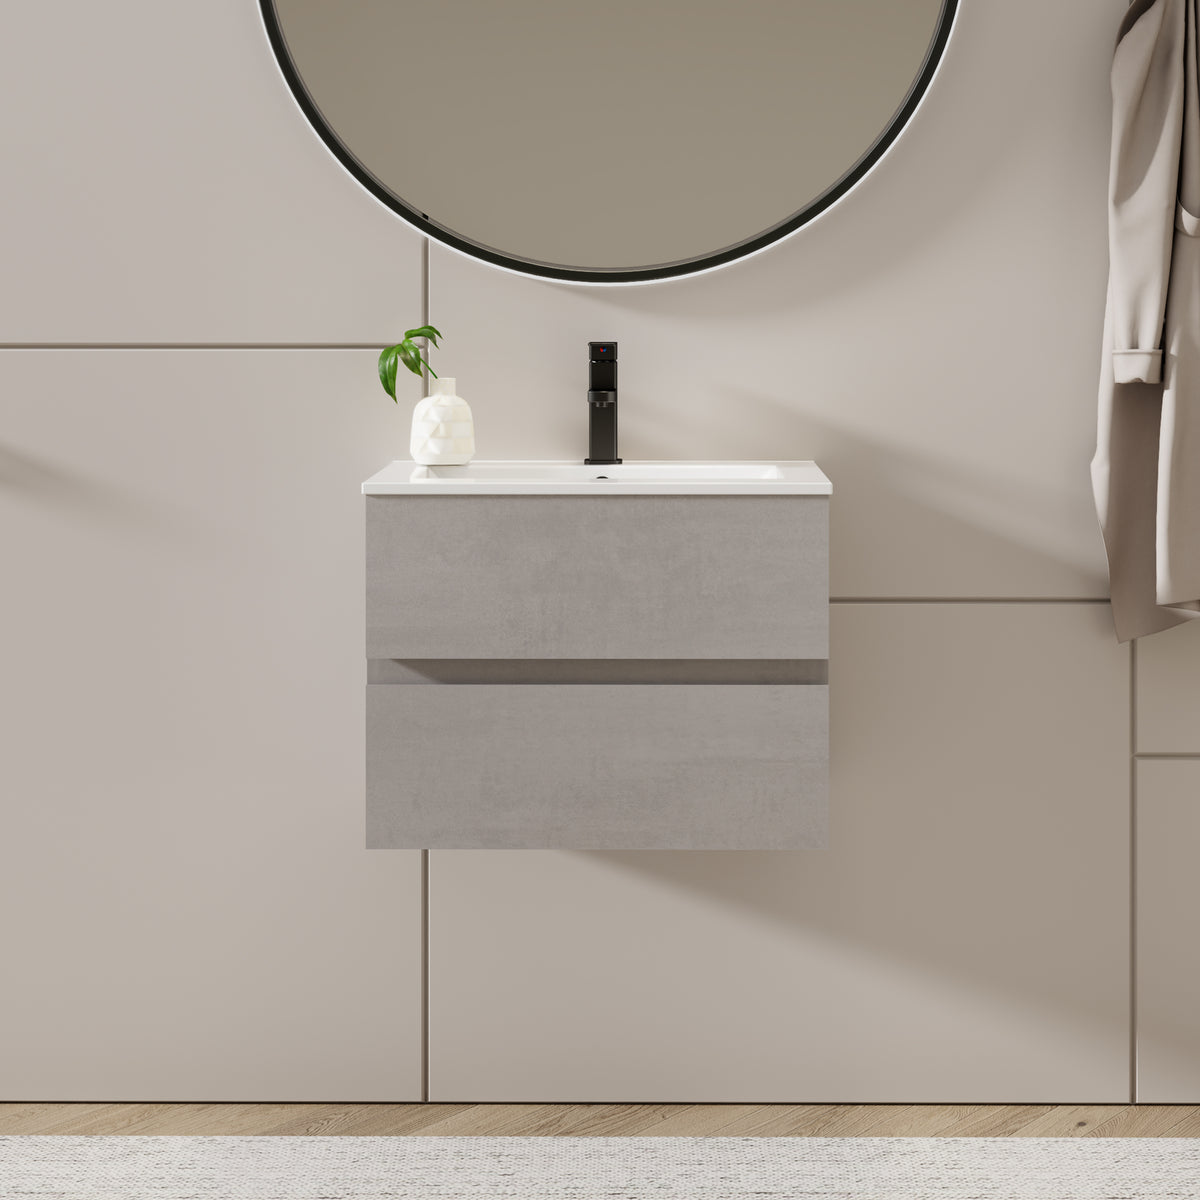 24" Wall Mounted Bathroom Vanity Combo with Single Undermount Sink —Cement Grey